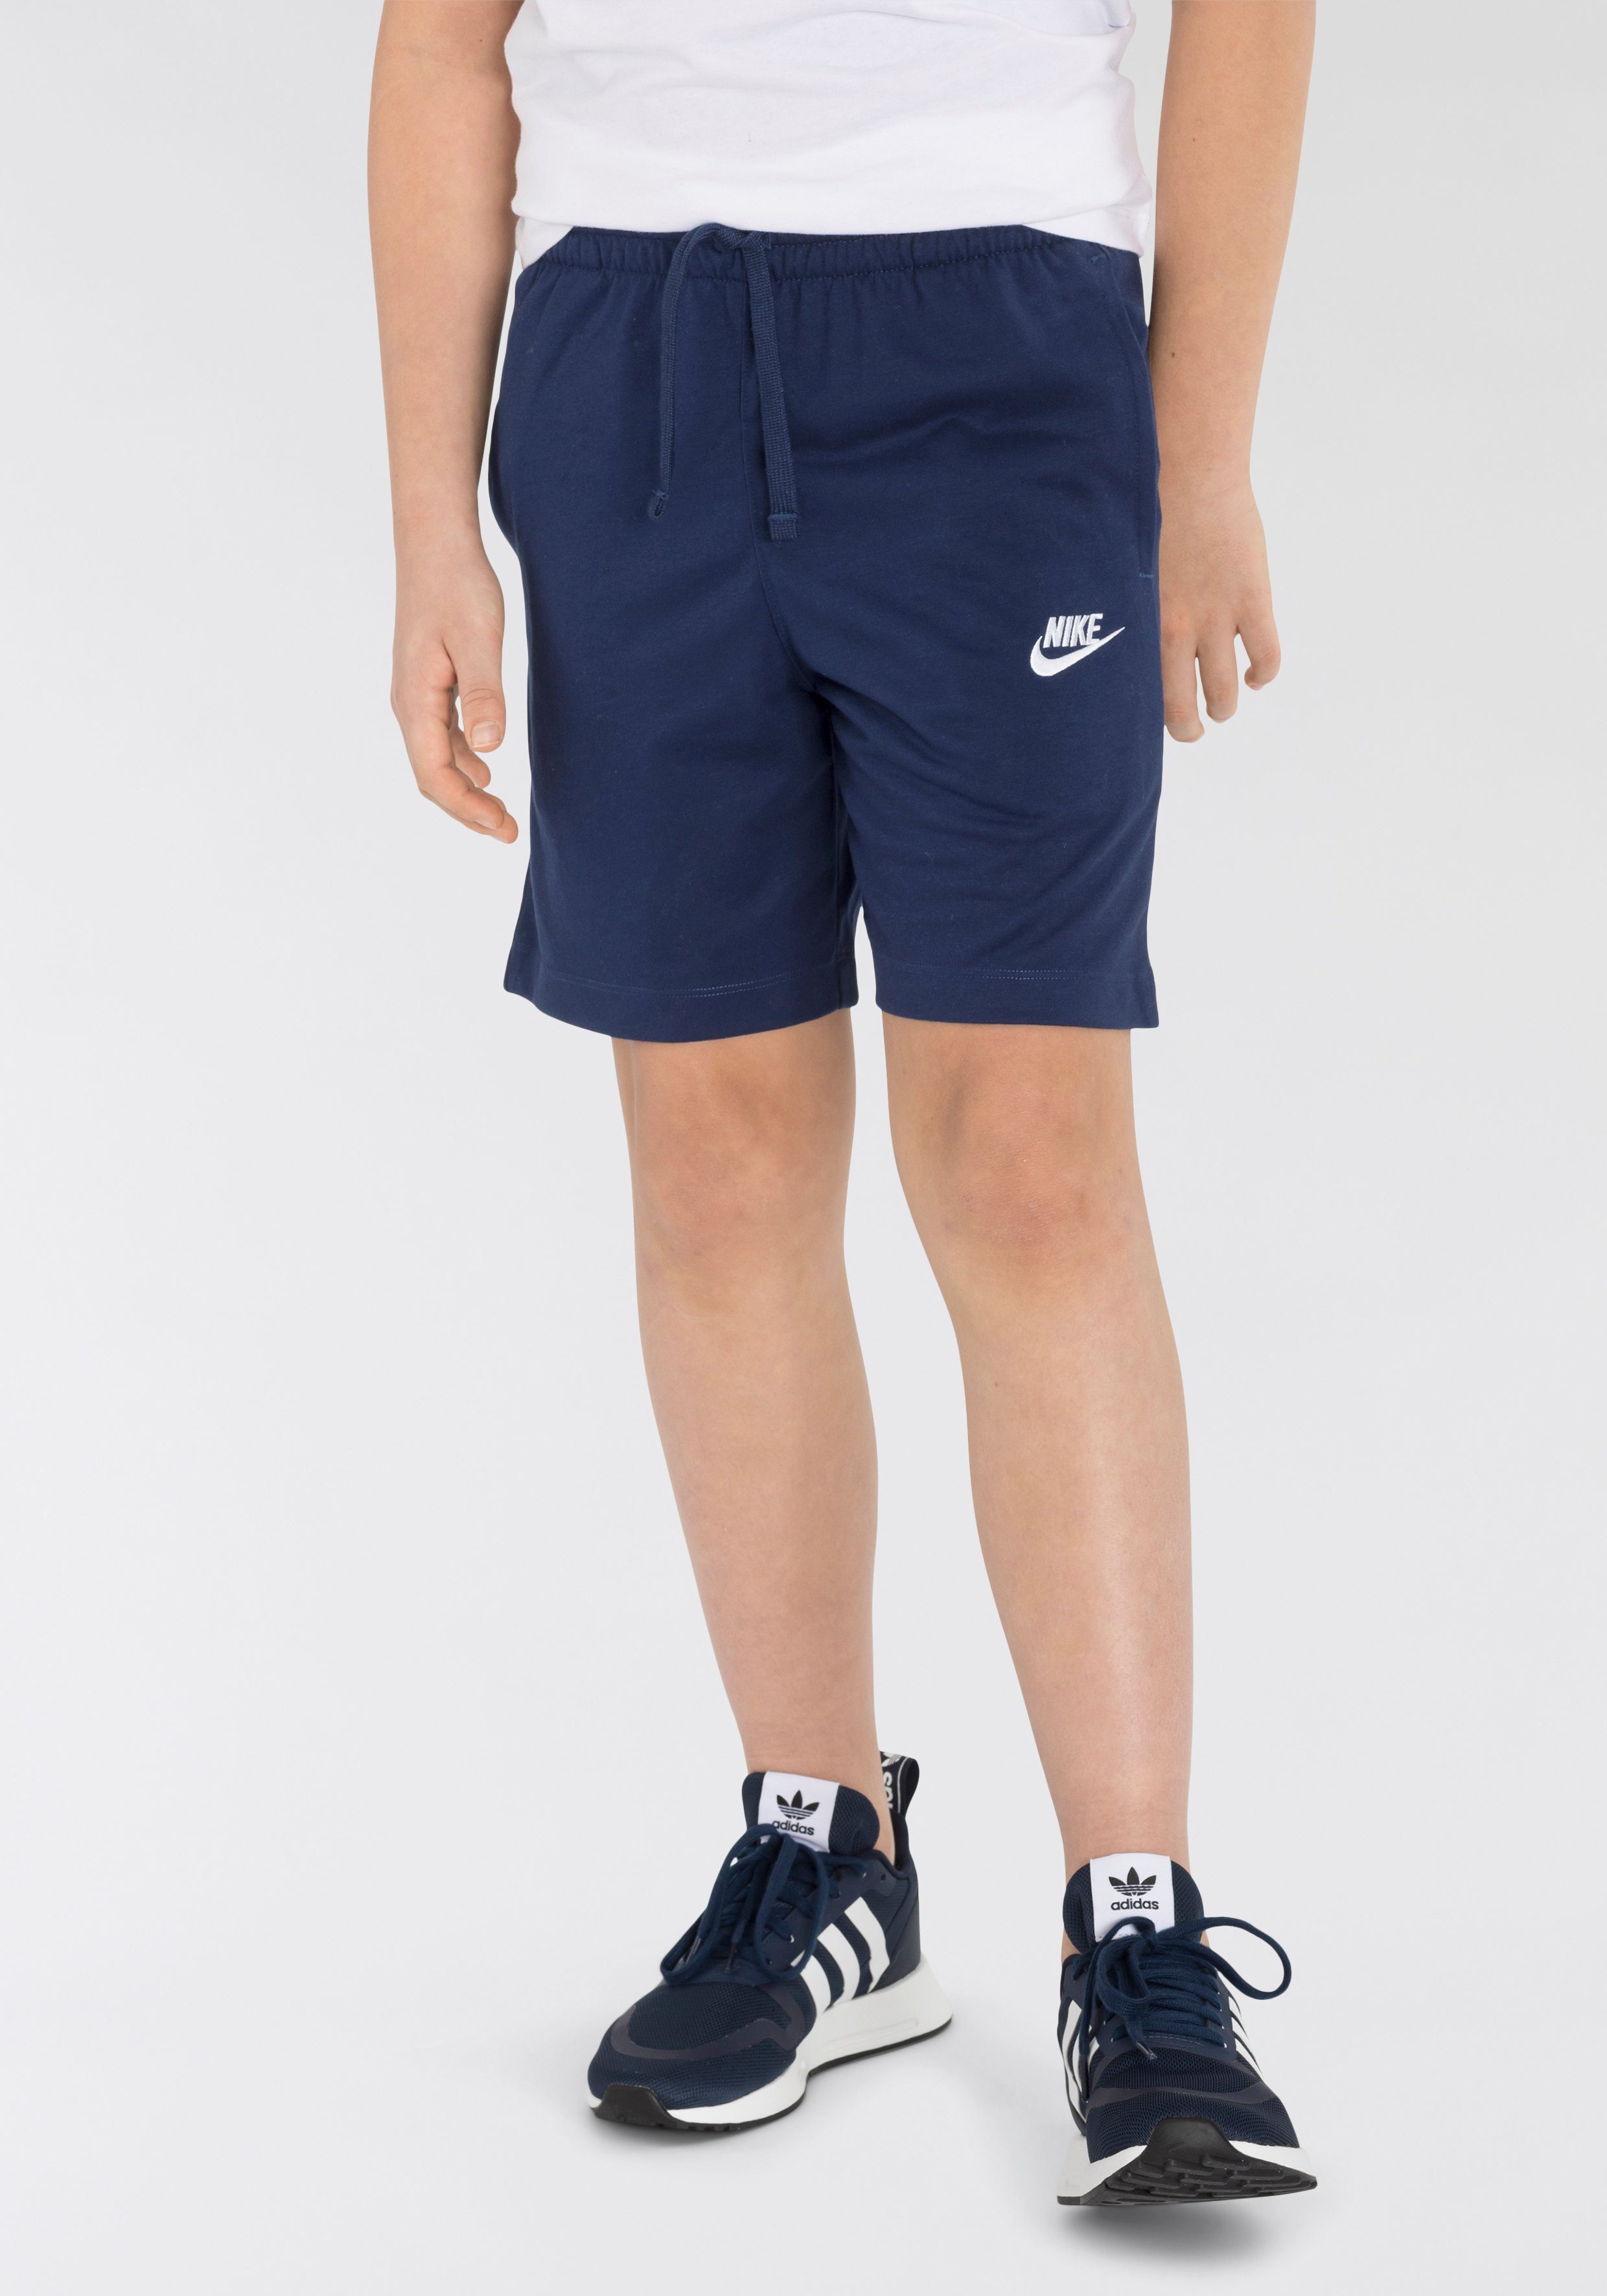 dunkelblau (BOYS) JERSEY BIG Shorts SHORTS Sportswear Nike KIDS'